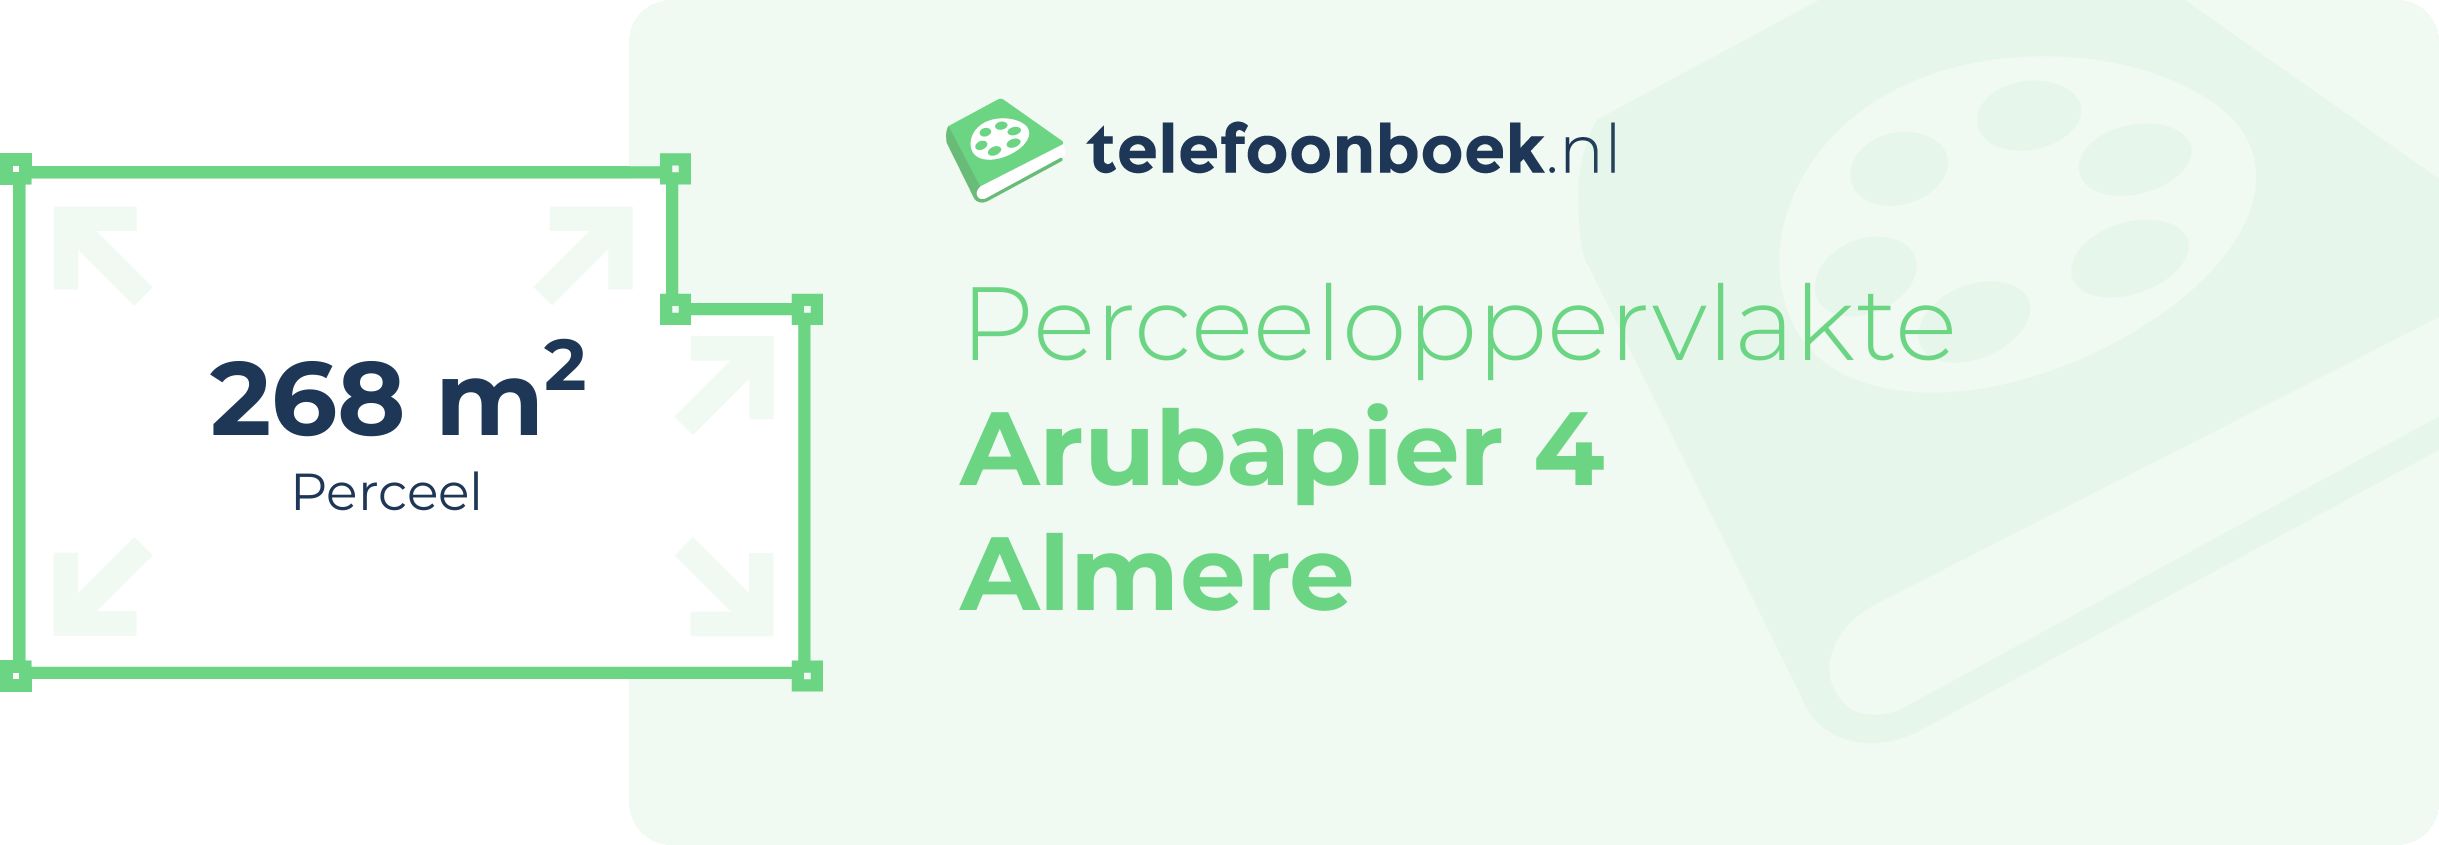 Perceeloppervlakte Arubapier 4 Almere